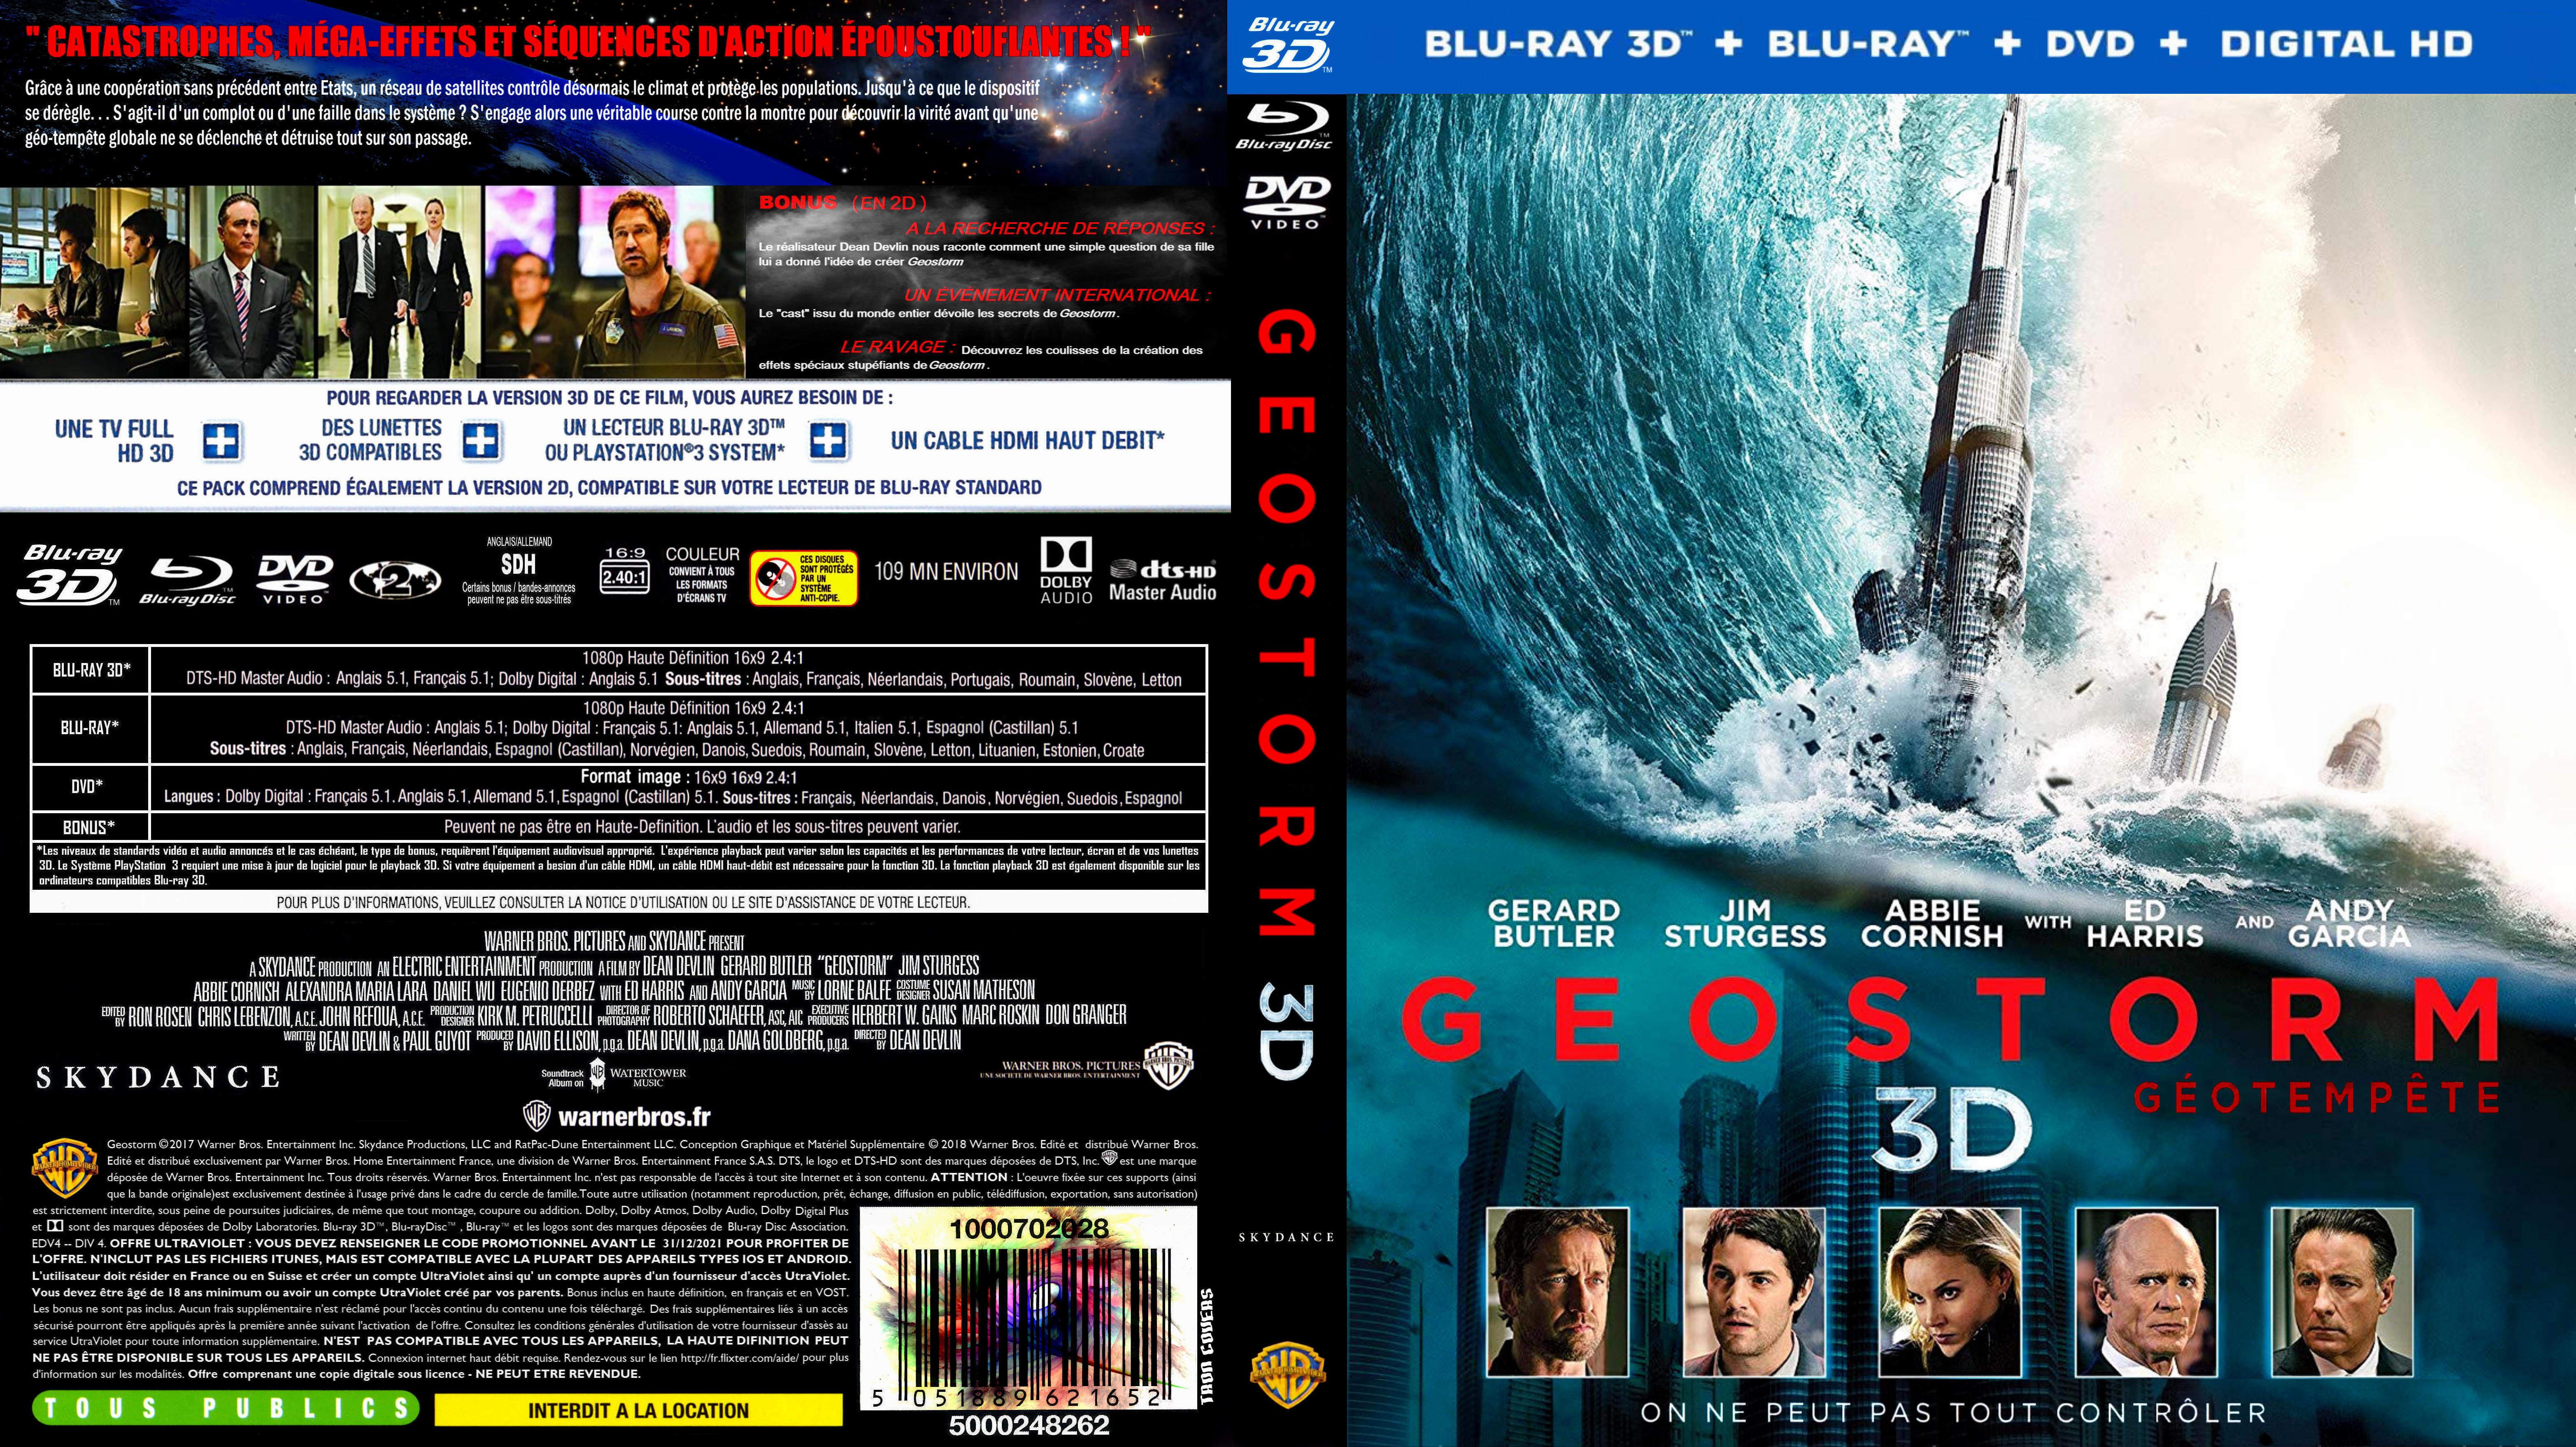 Jaquette DVD Geostorm 3D (BLU-RAY)